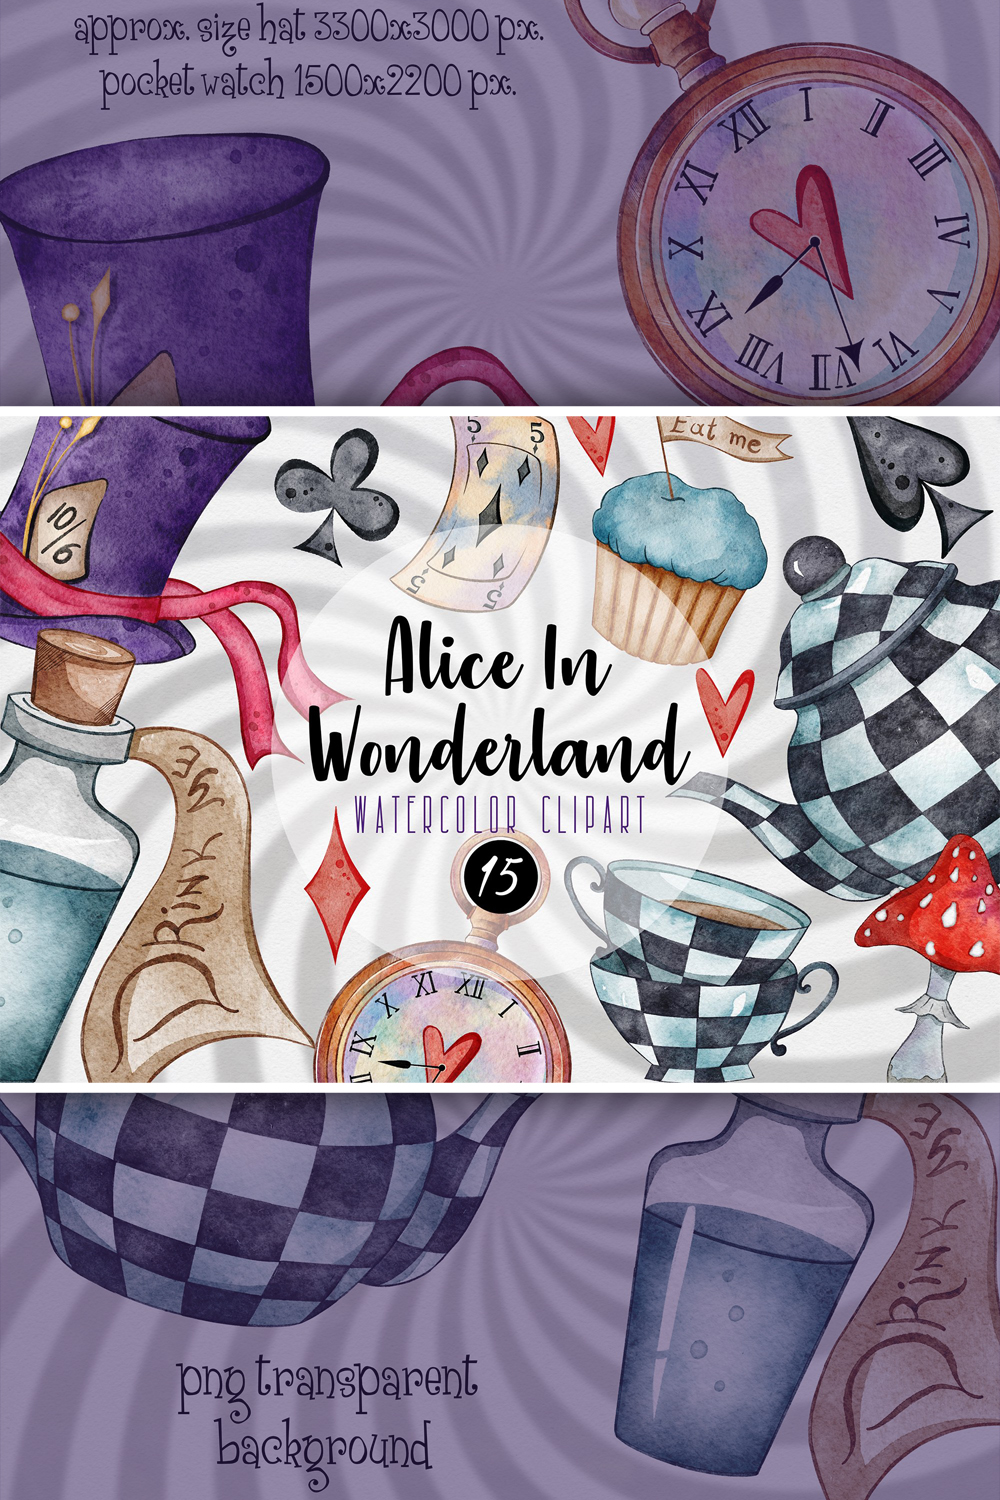 Alice in wonderland watercolor clipart tea party of pinterest.